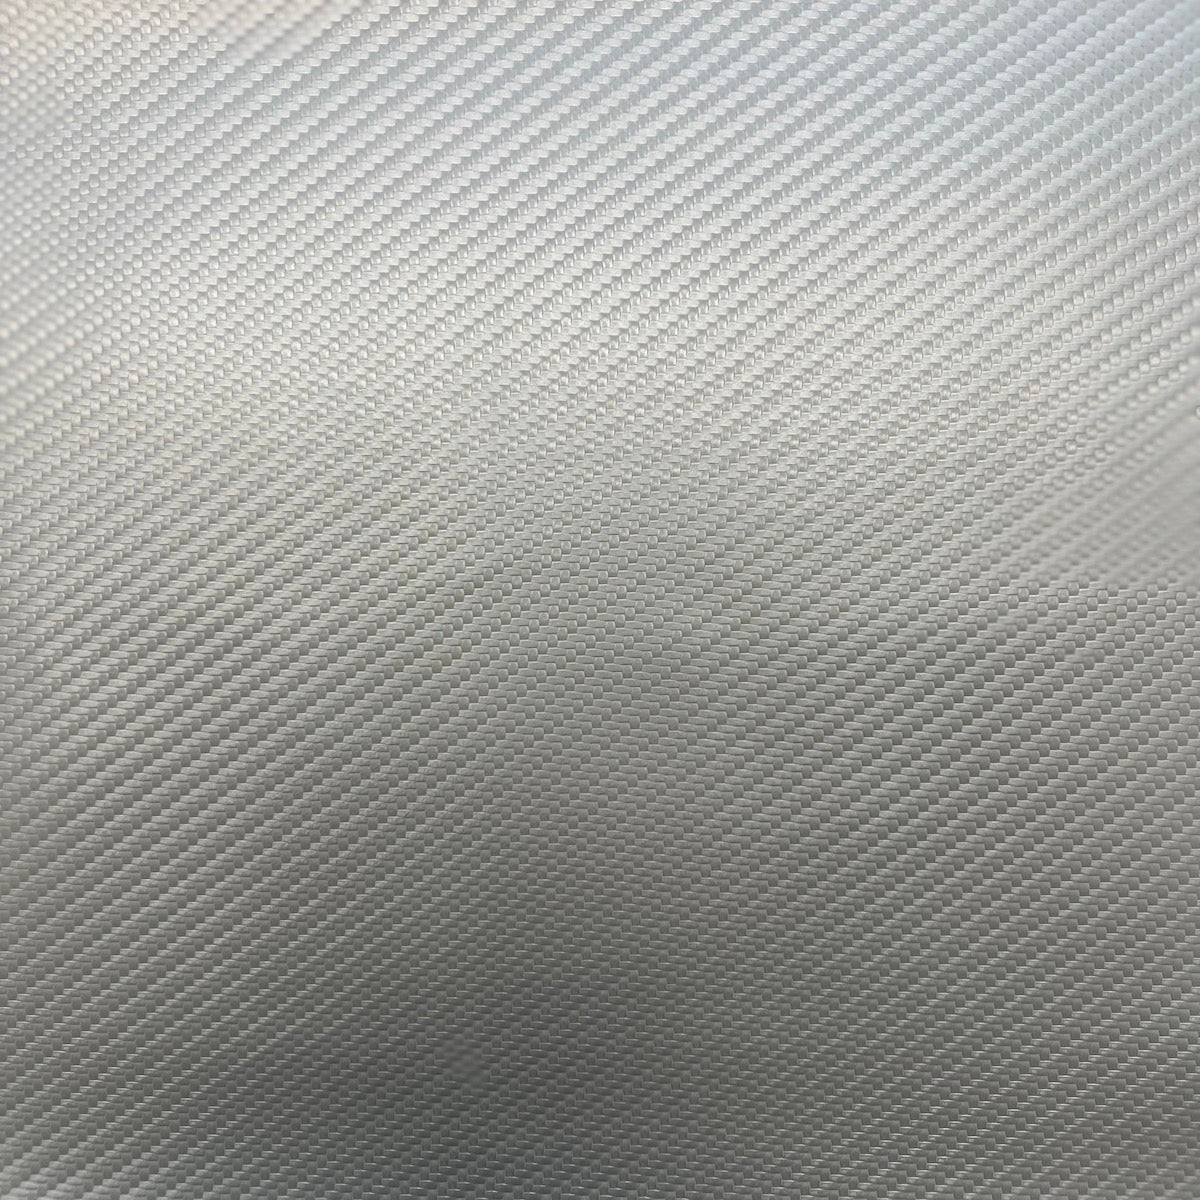 Ivory Textured PVC Leather Vinyl Fabric